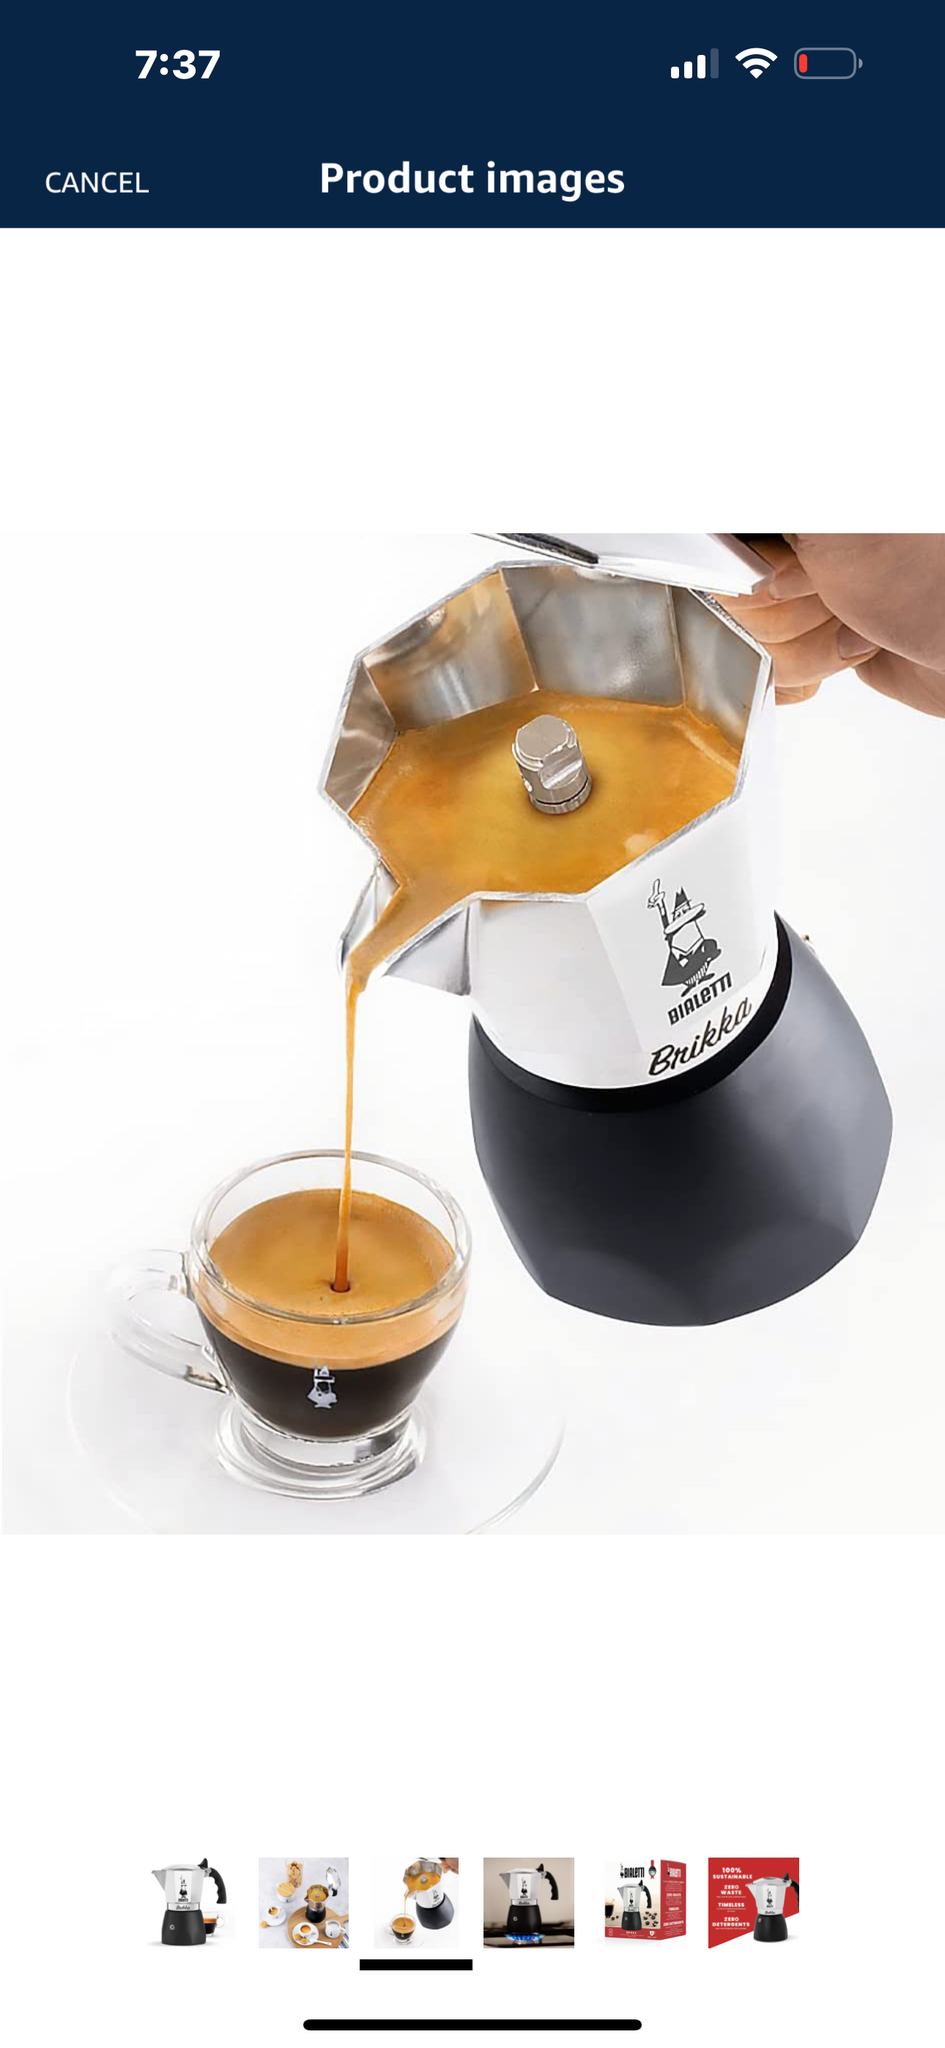 Bialetti Brikka 4 cups coffee maker that produce crema